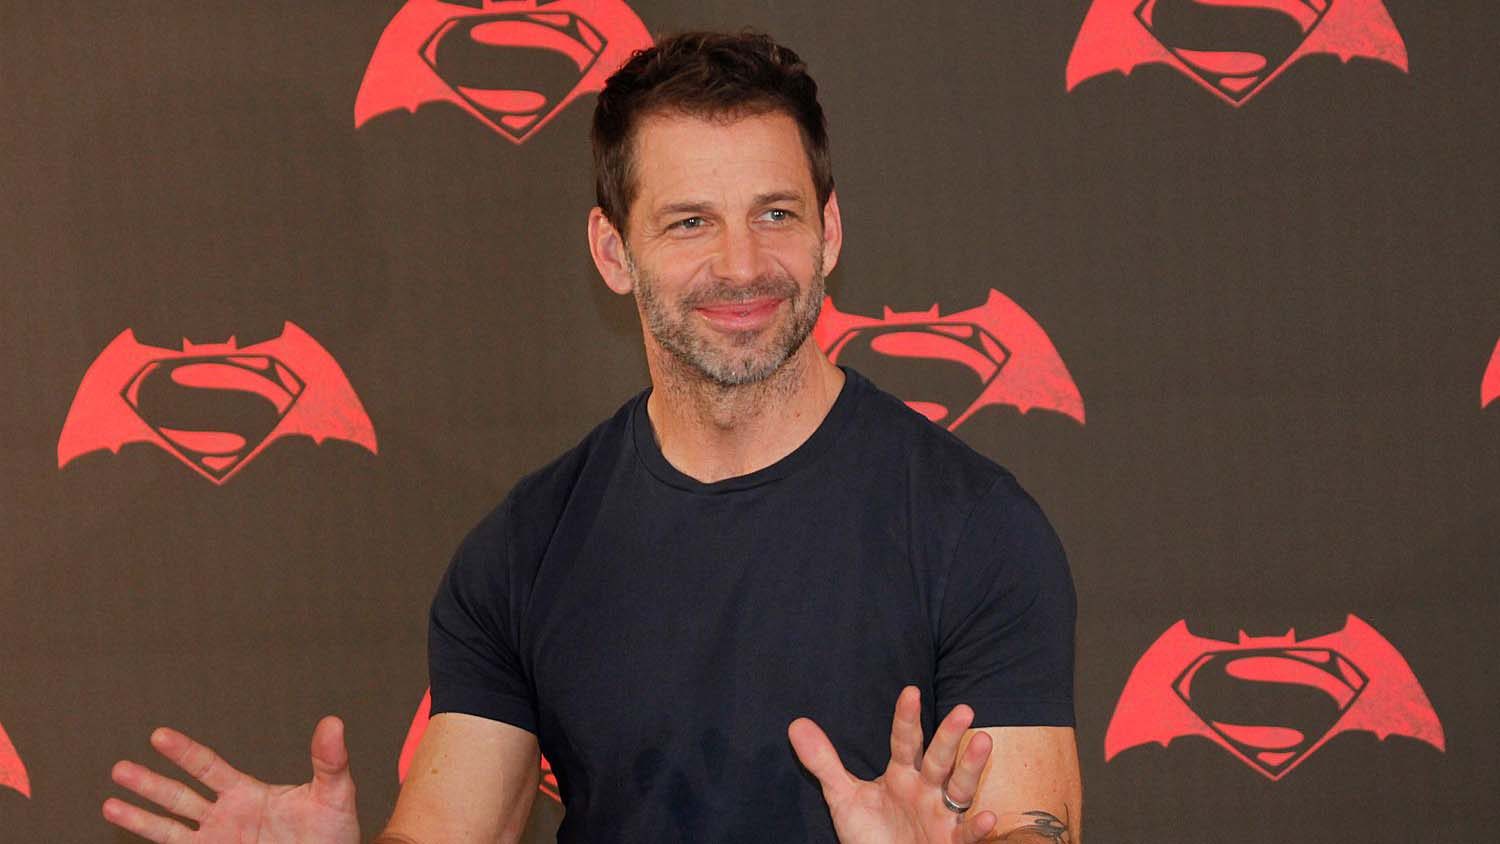 Netflix confirma a presença de Zack Snyder e Jennifer Aniston no TUDUM